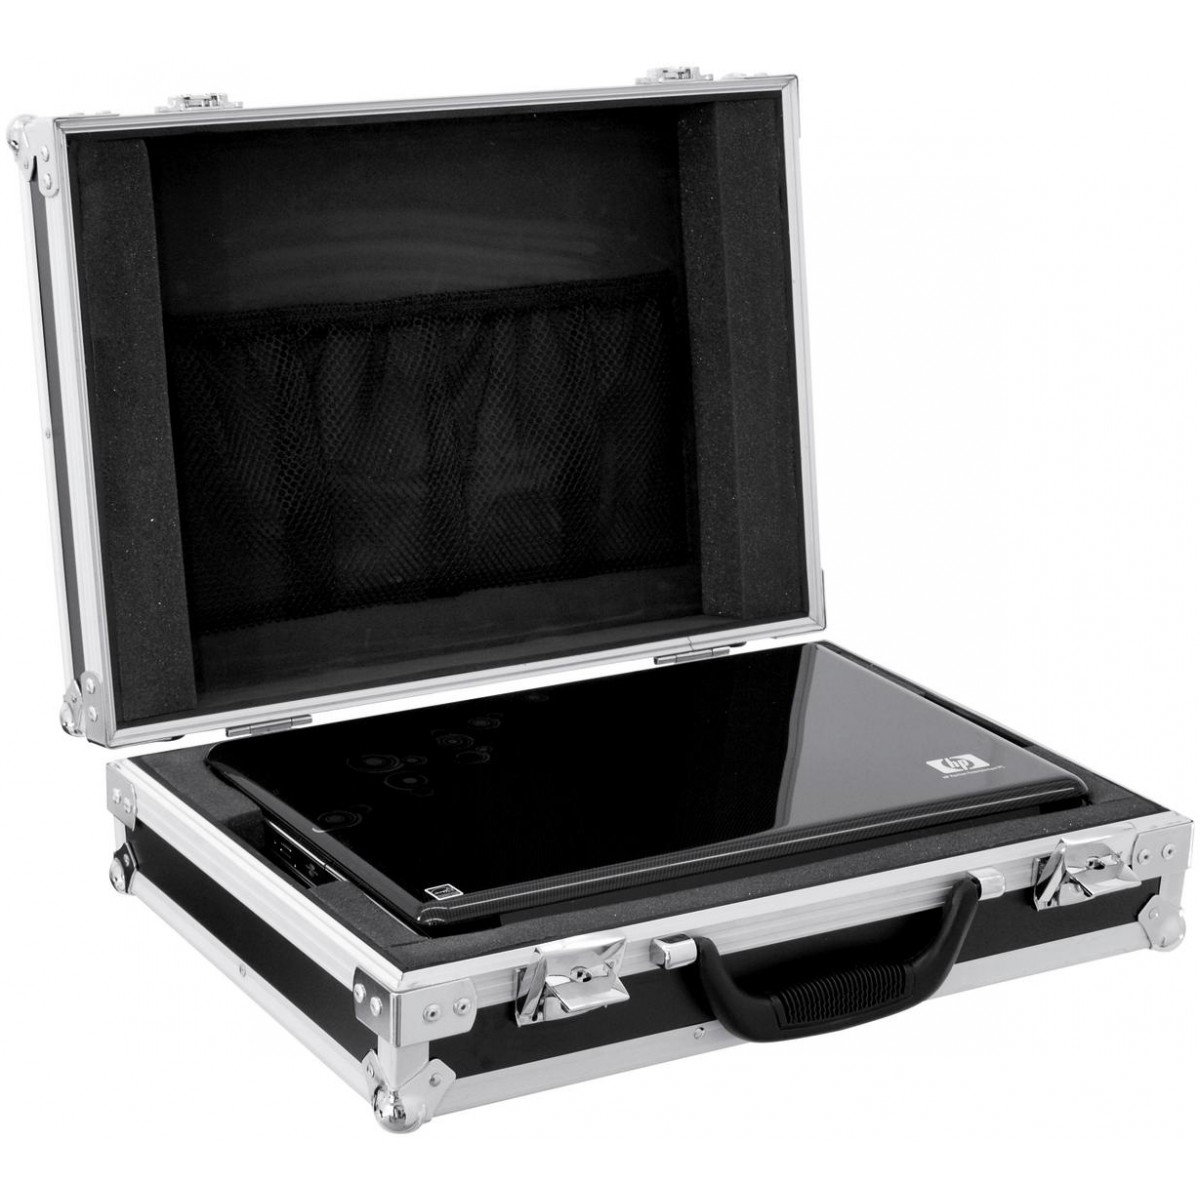 Laptopový case LC-15, max. 370 x 255 x 30 mm